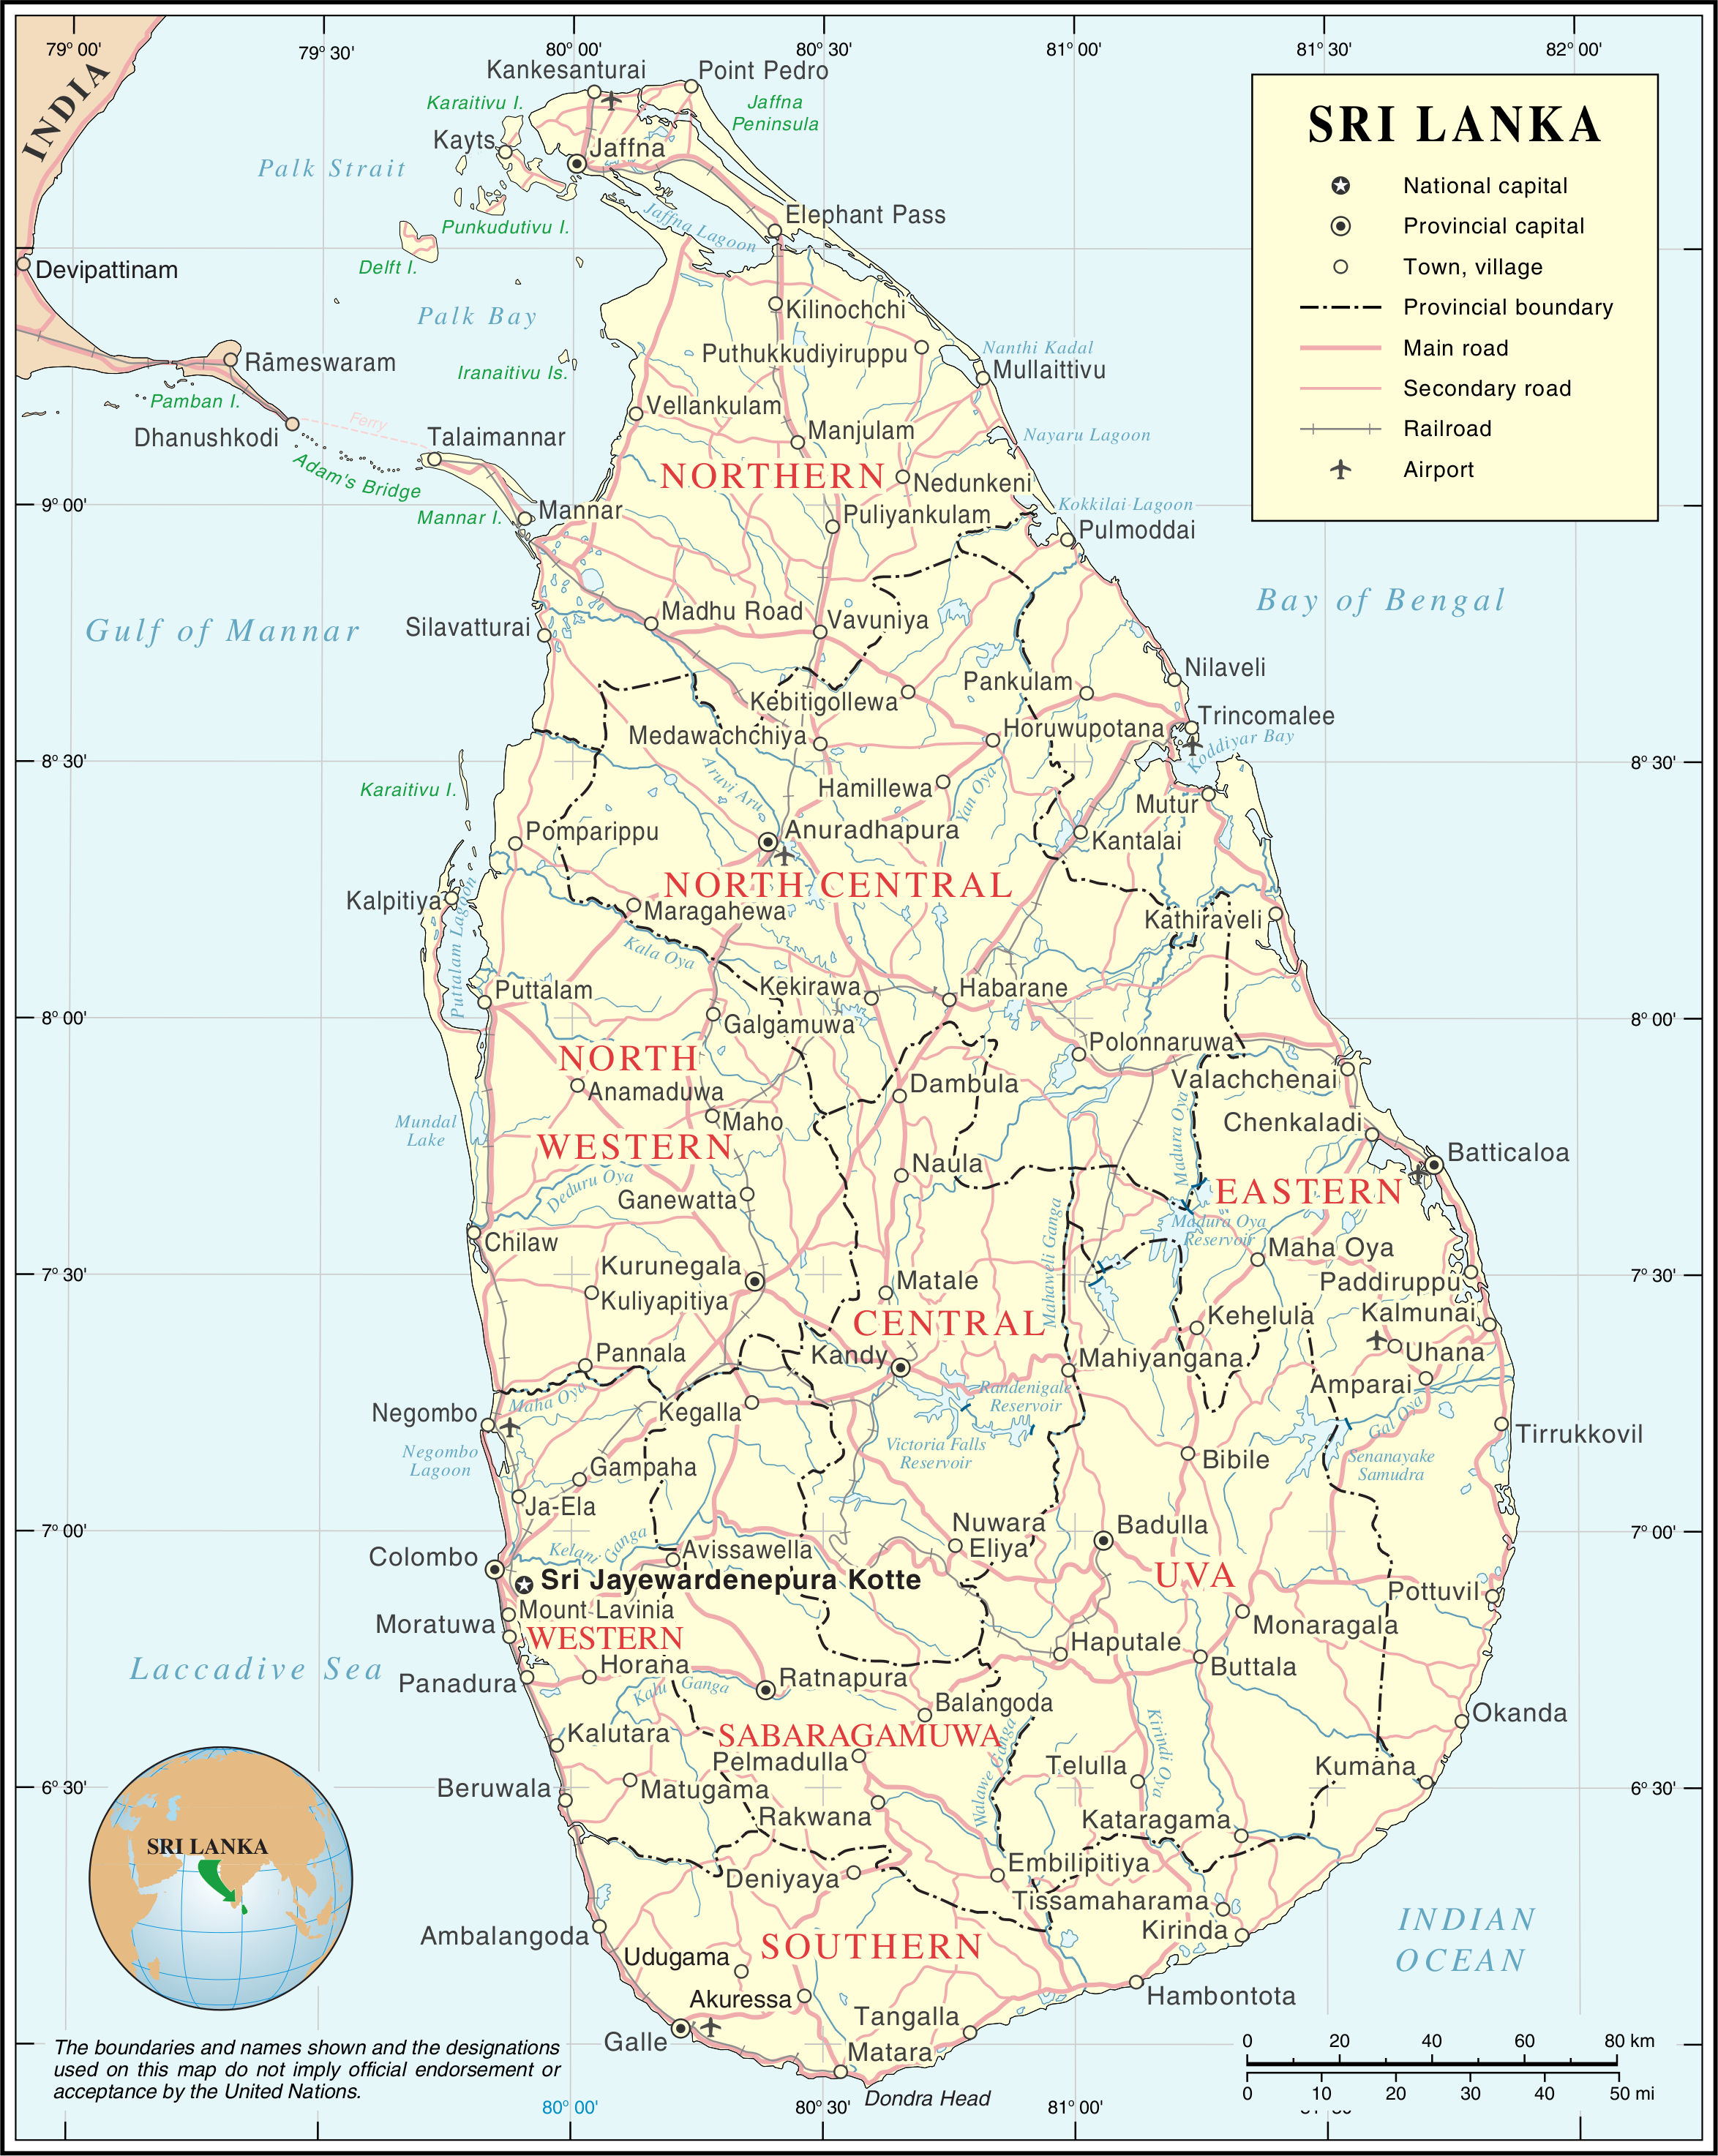 List of airports in Sri Lanka